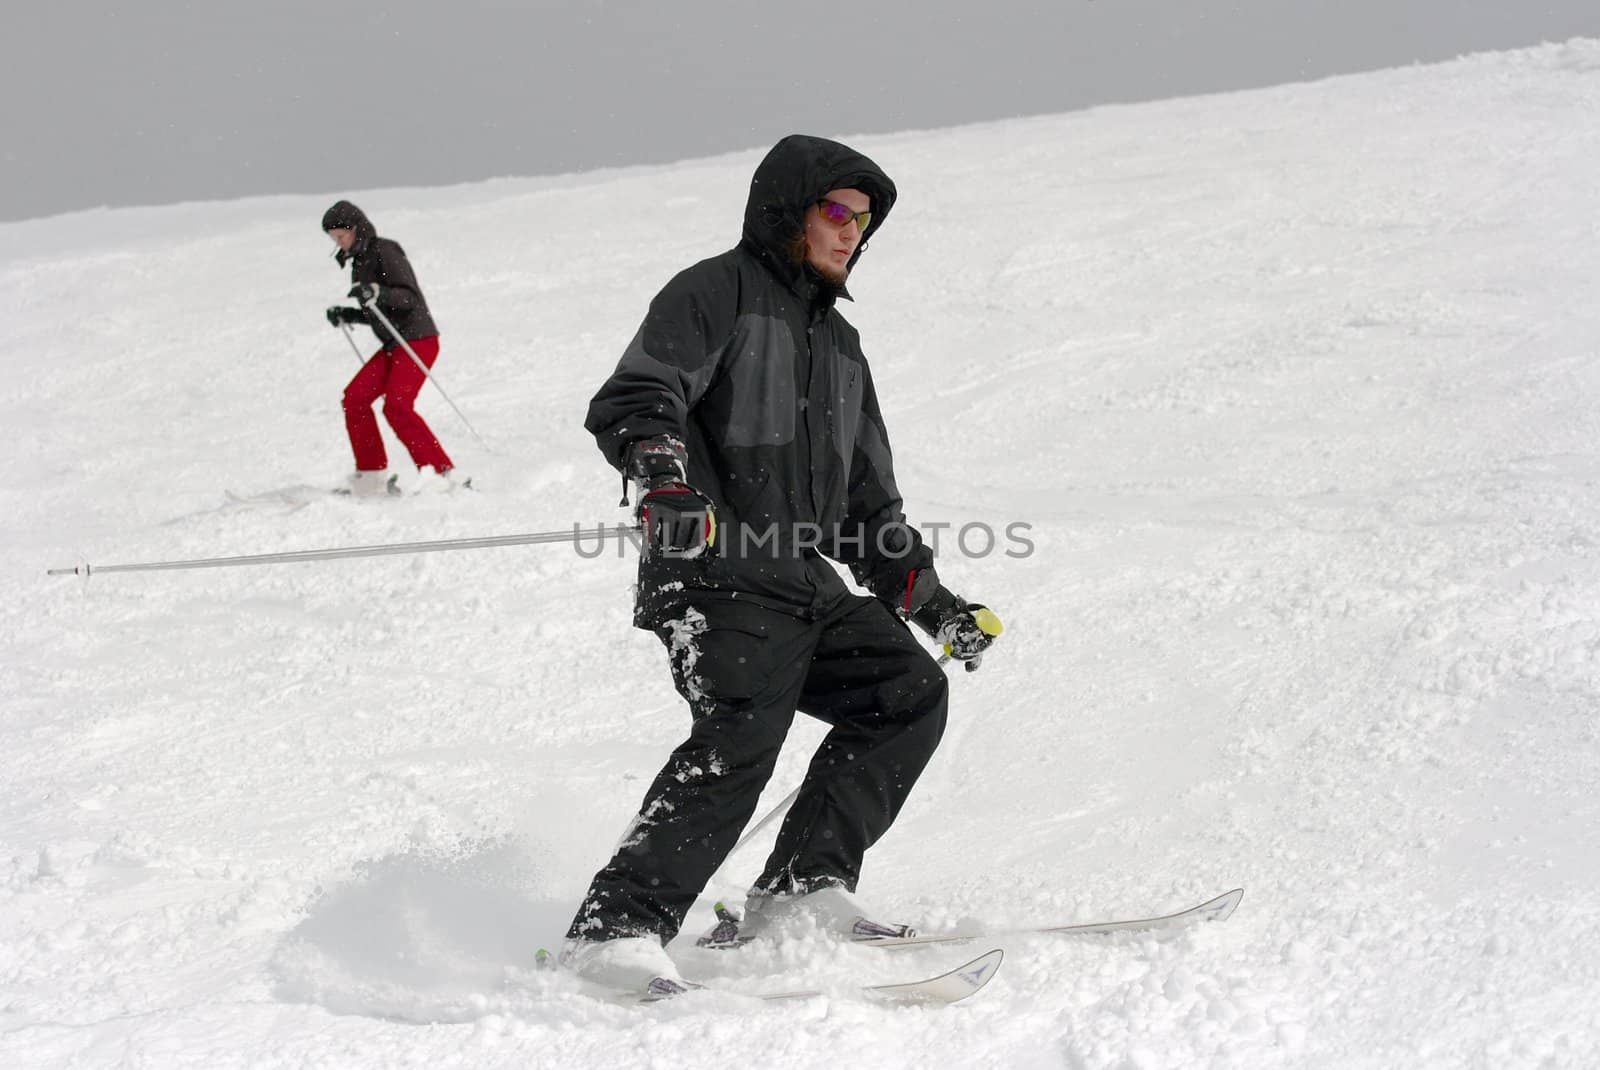 Beginner skiers coming down the slope